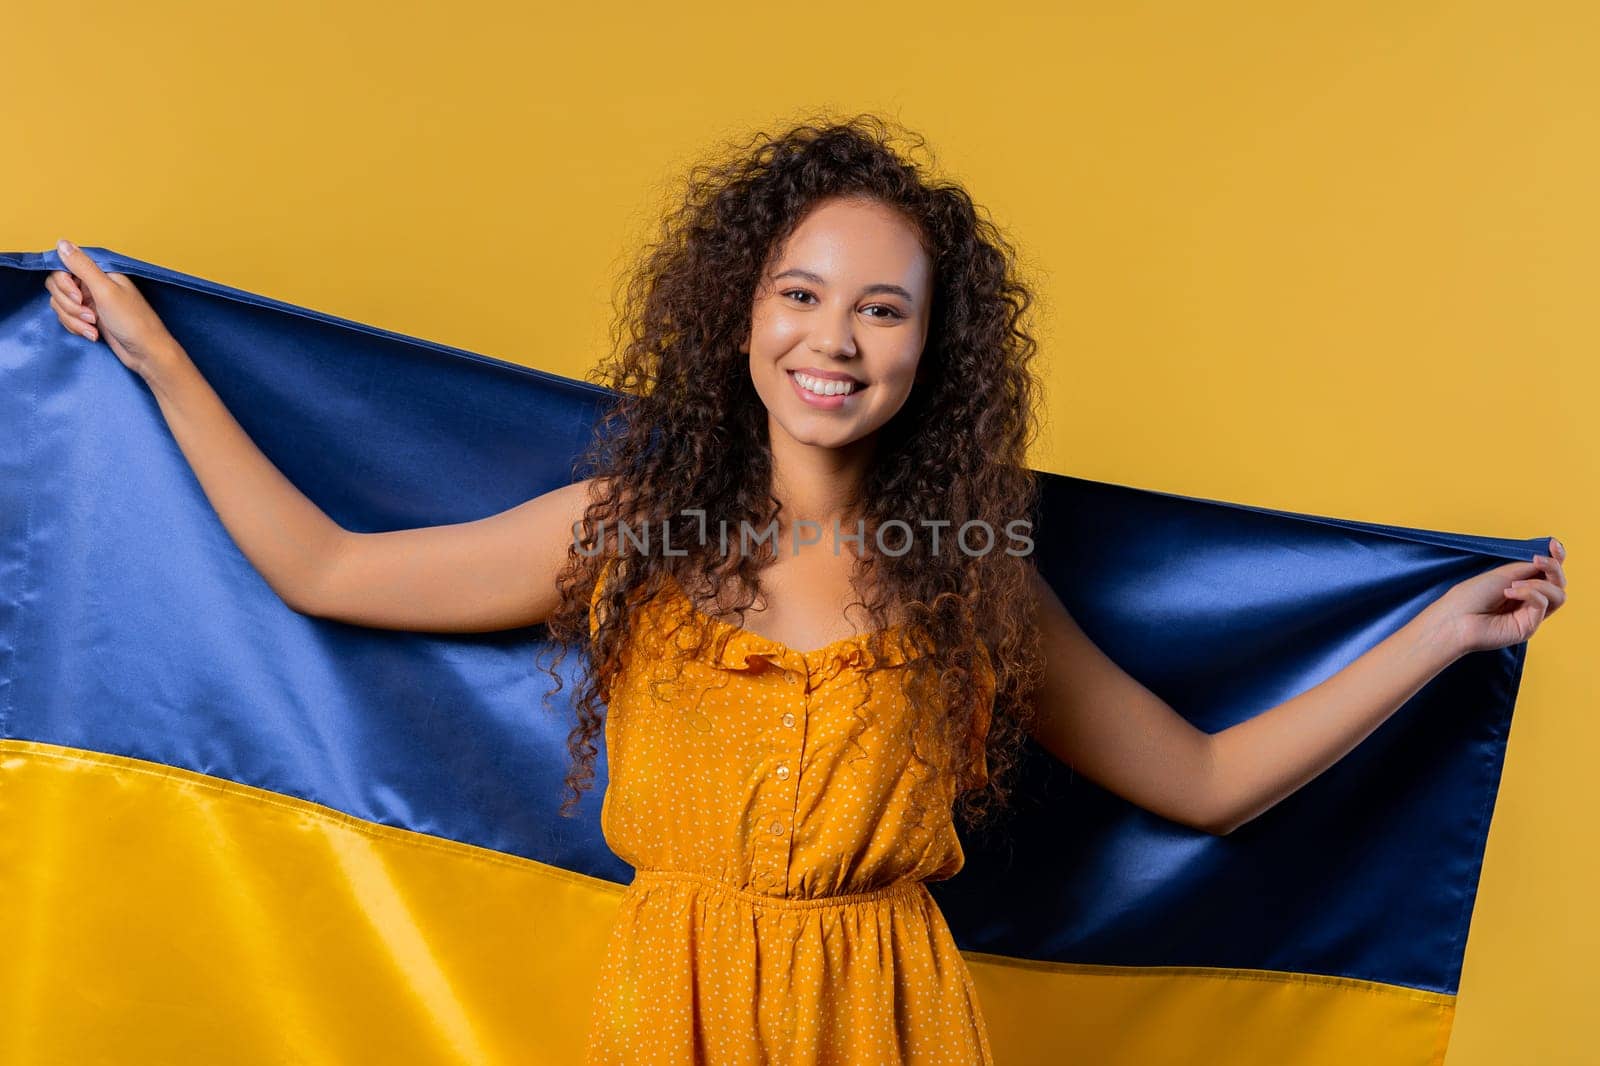 Woman with national Ukrainian flag. Ukraine, patriot, victory war celebration by kristina_kokhanova